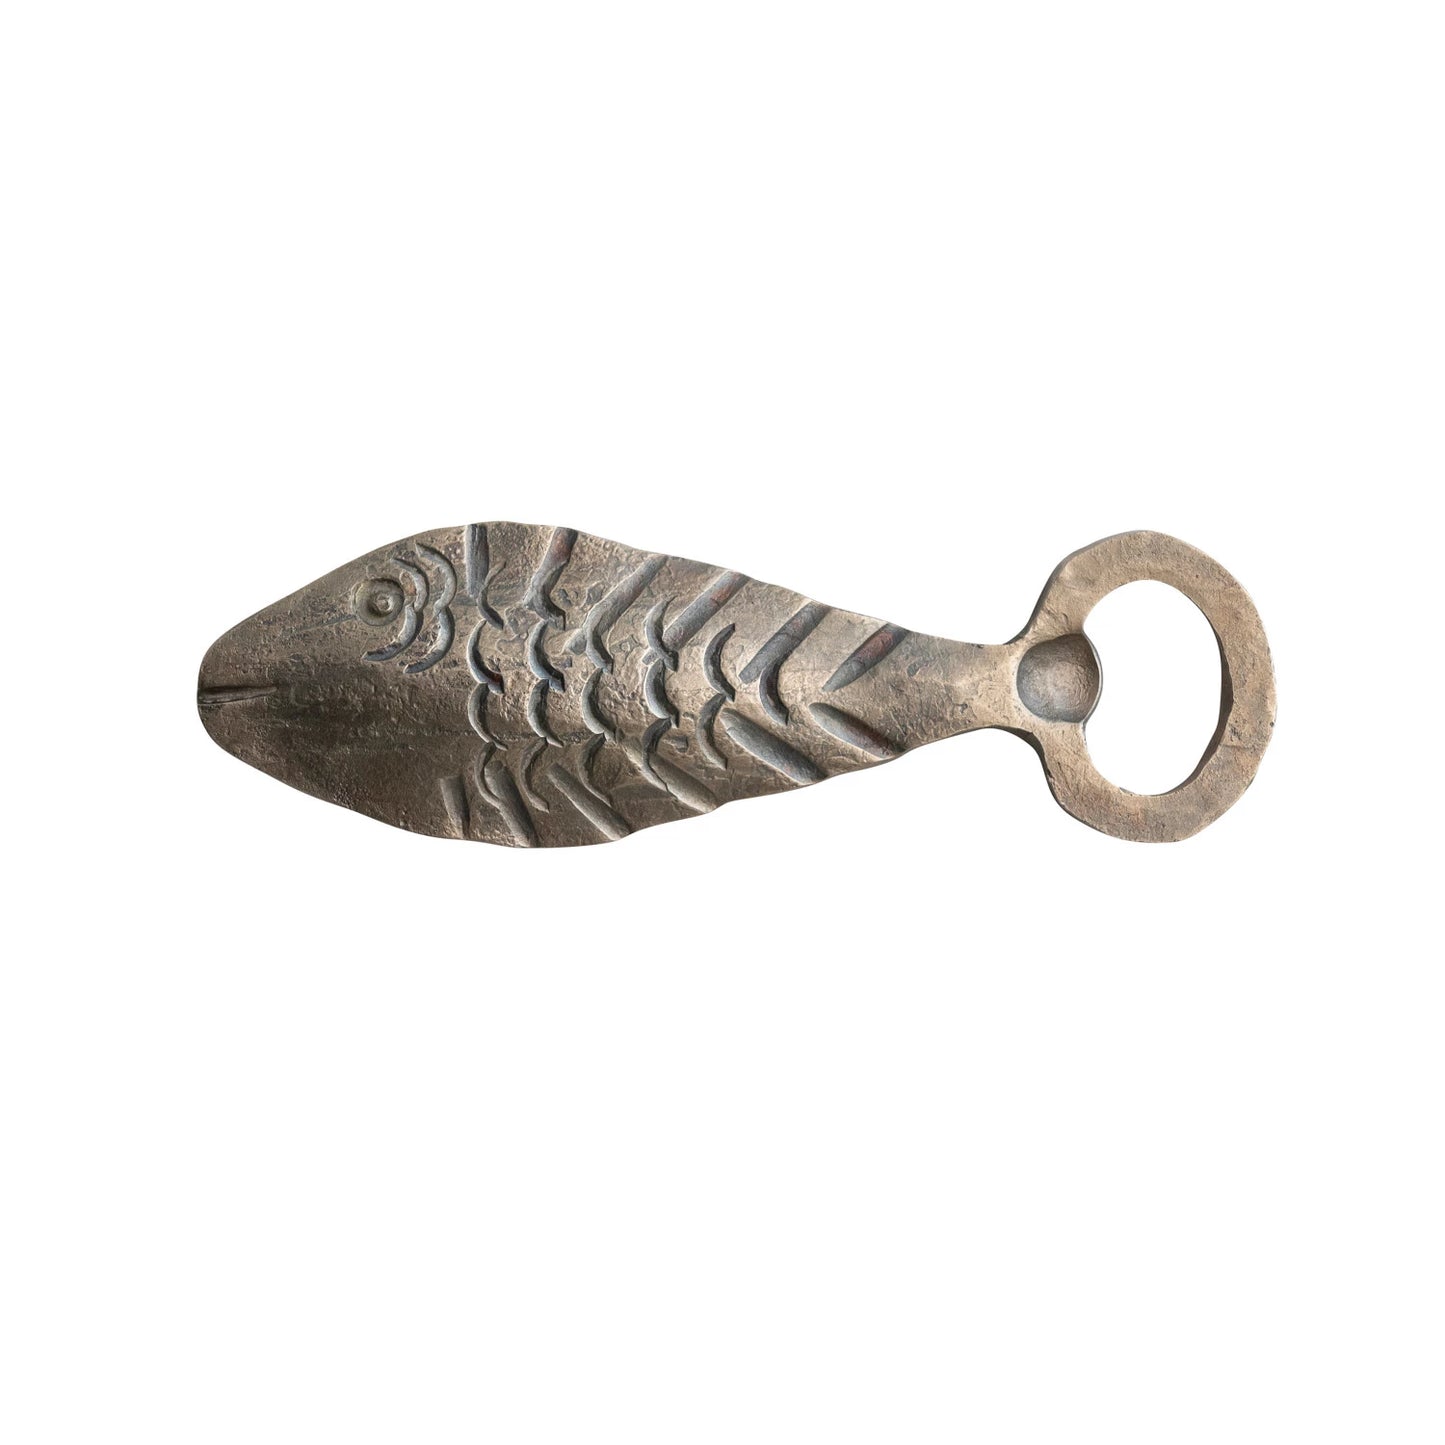 Cast Metal Fish Bottle Opener - Antique Brass Finish